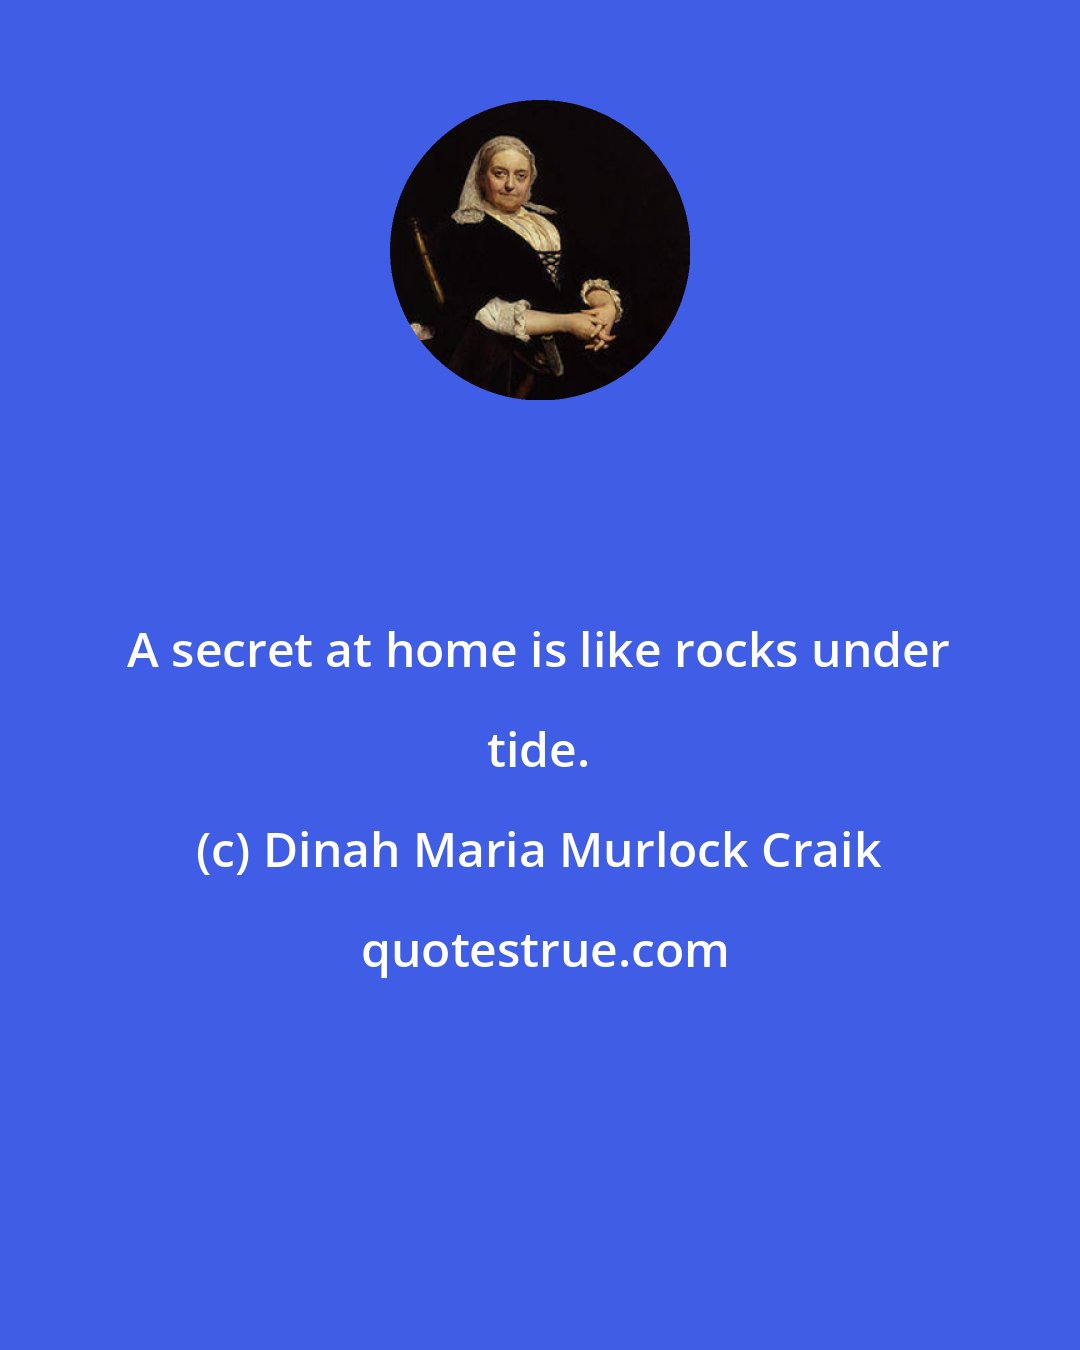 Dinah Maria Murlock Craik: A secret at home is like rocks under tide.